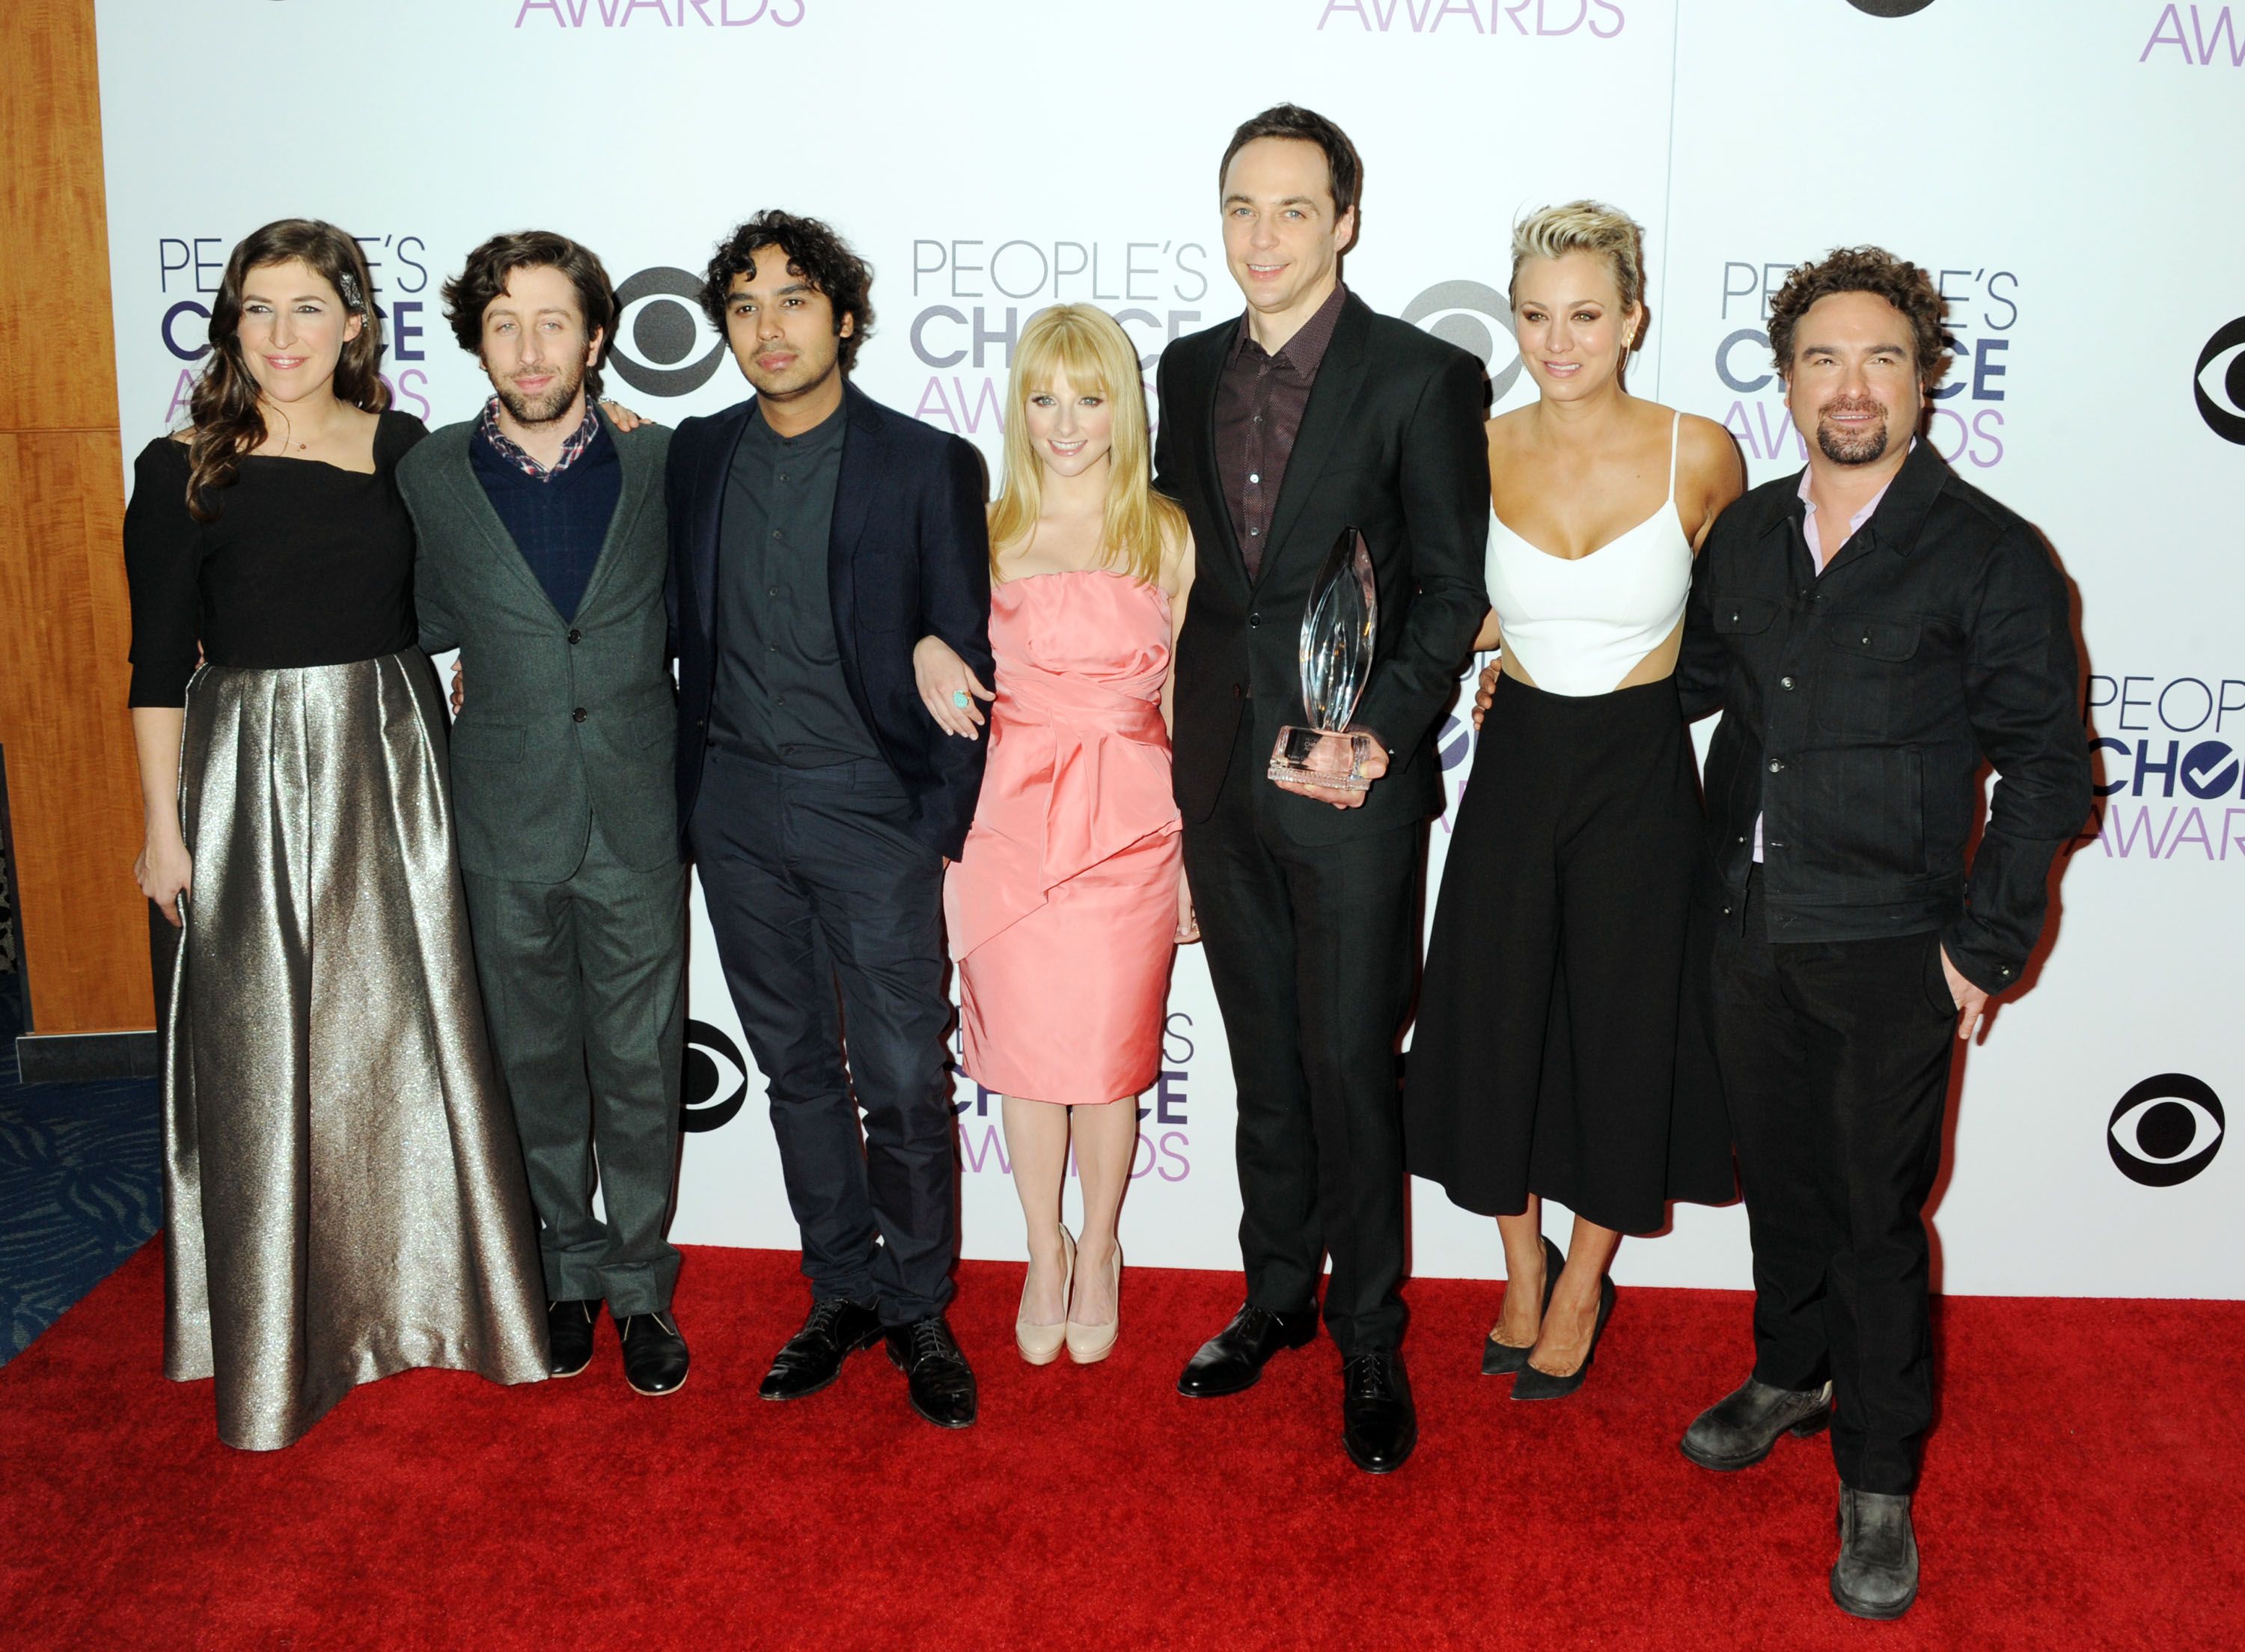 Elenco de The Big Bang Theory no People's Choice Awards 2015